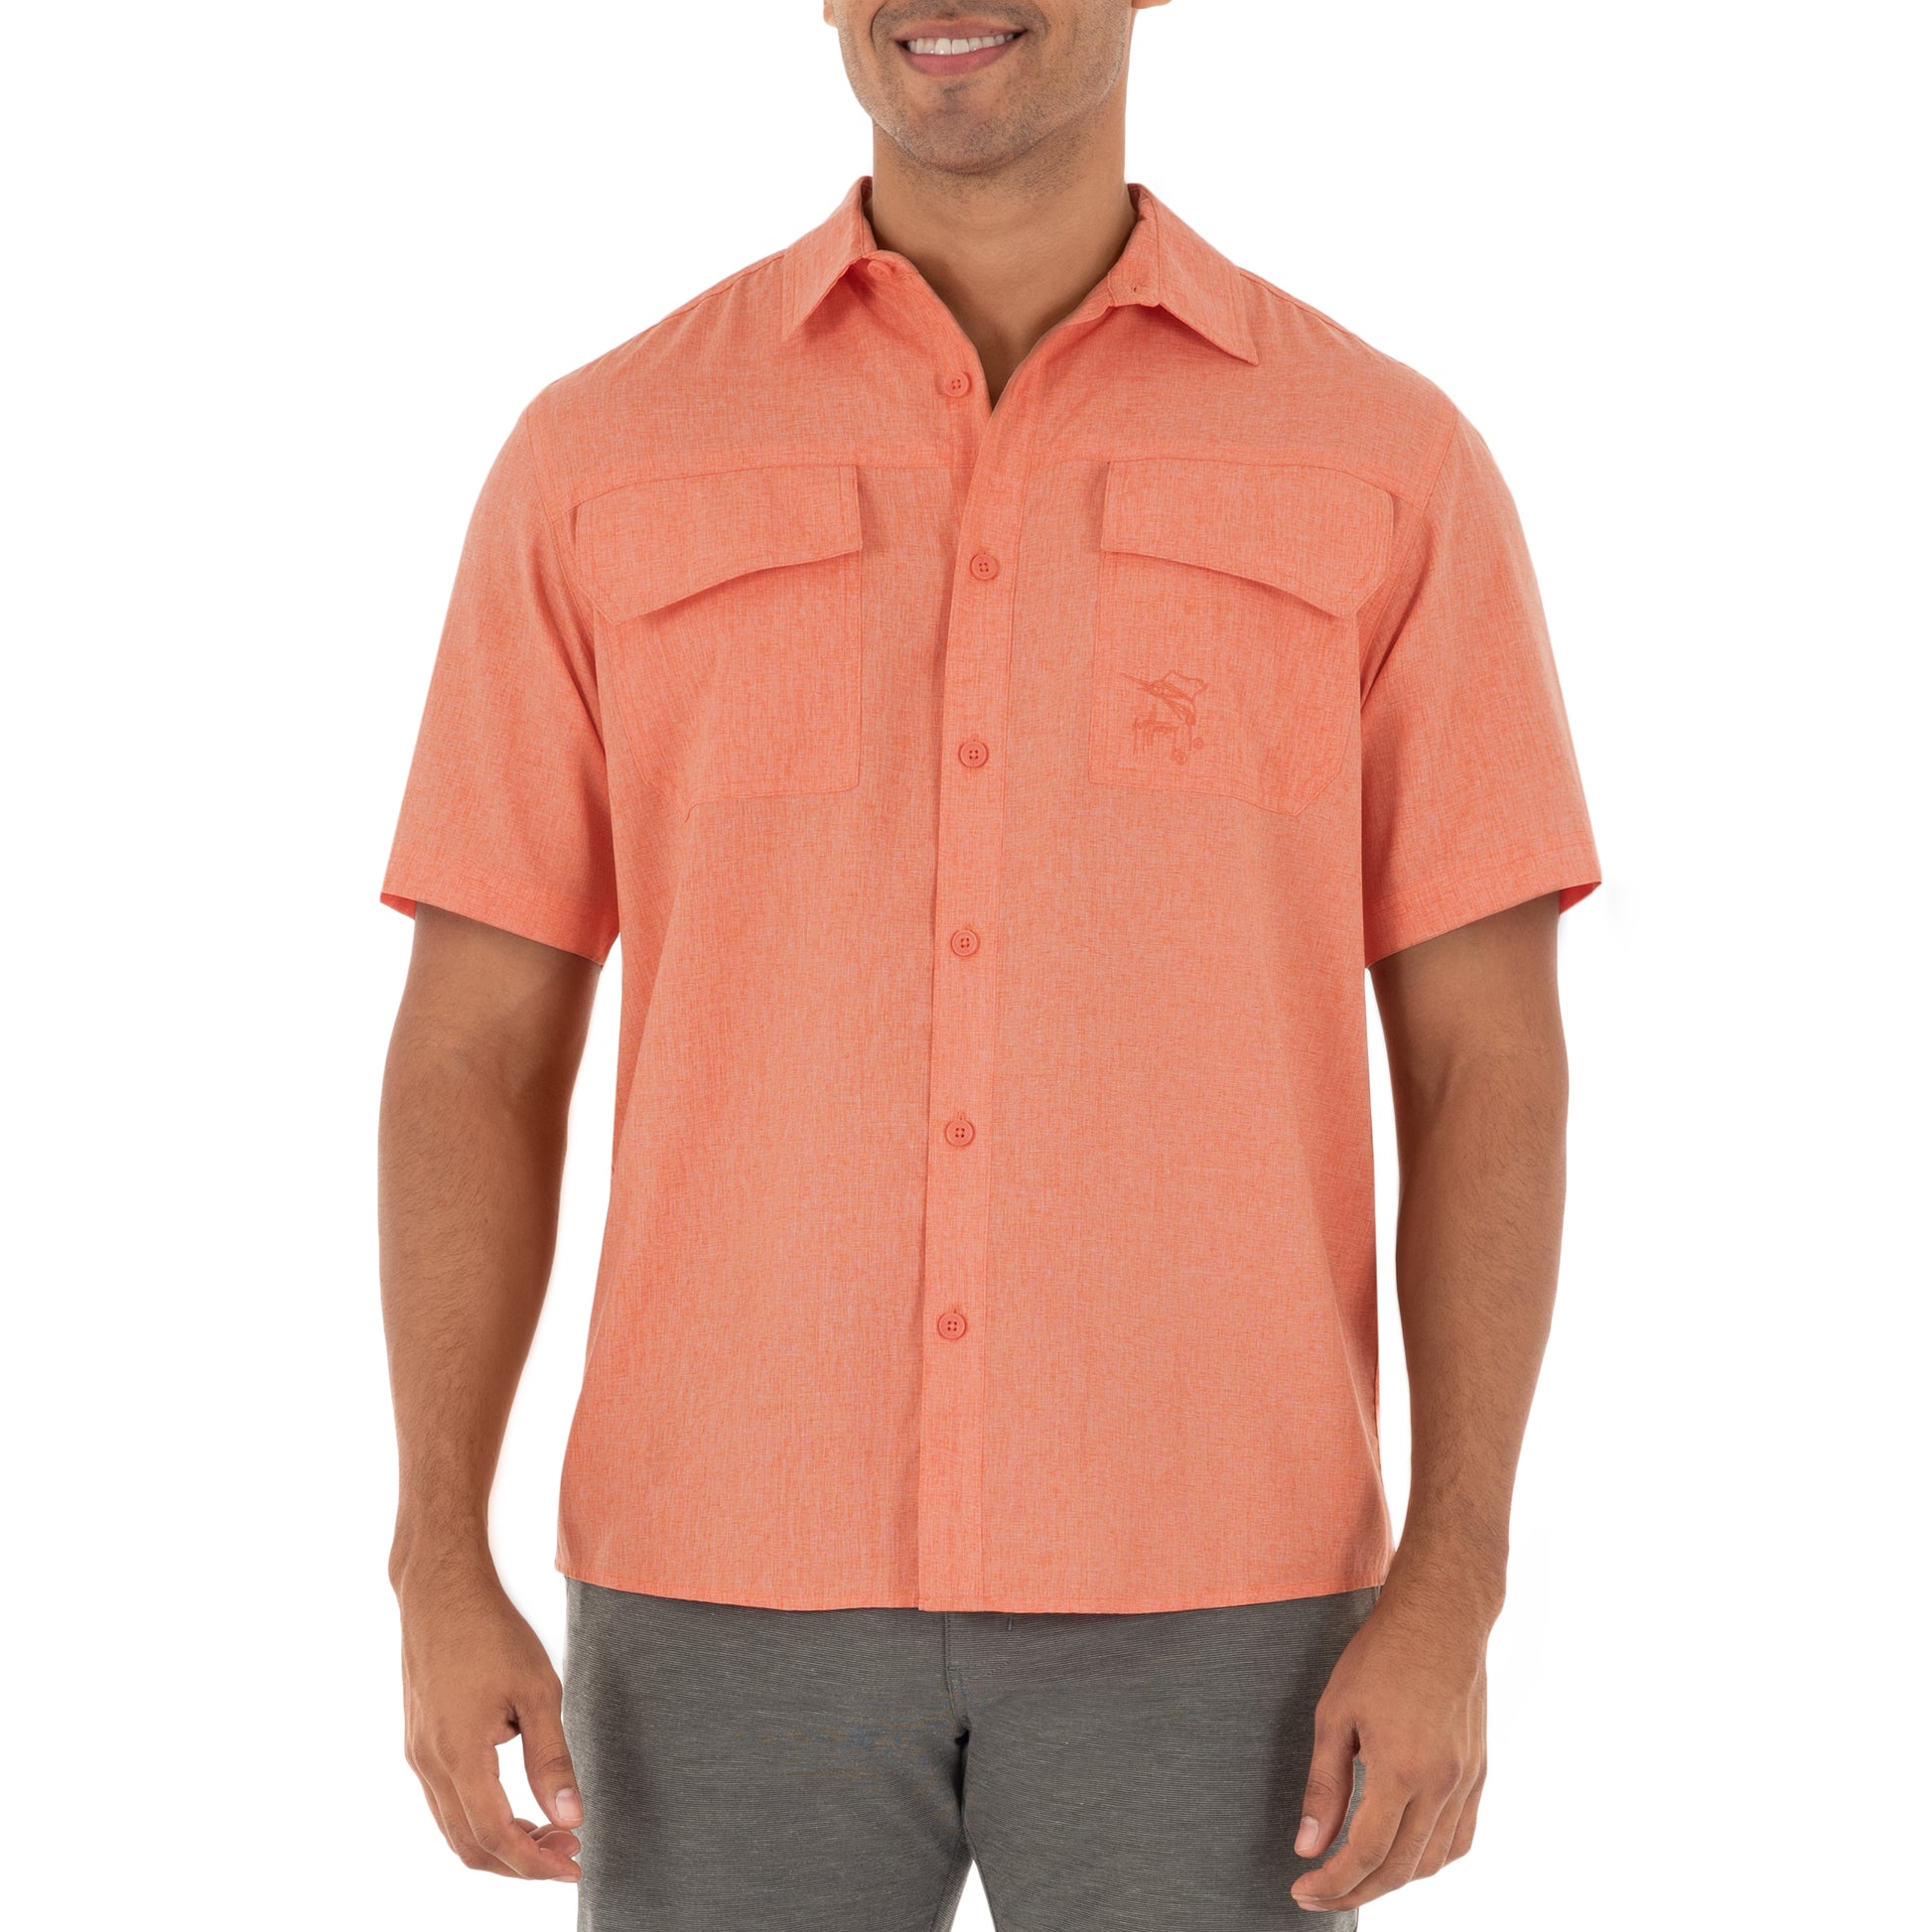 Guy Harvey | Men's Short Sleeve Heather Textured Cationic Coral Fishing Shirt, XL